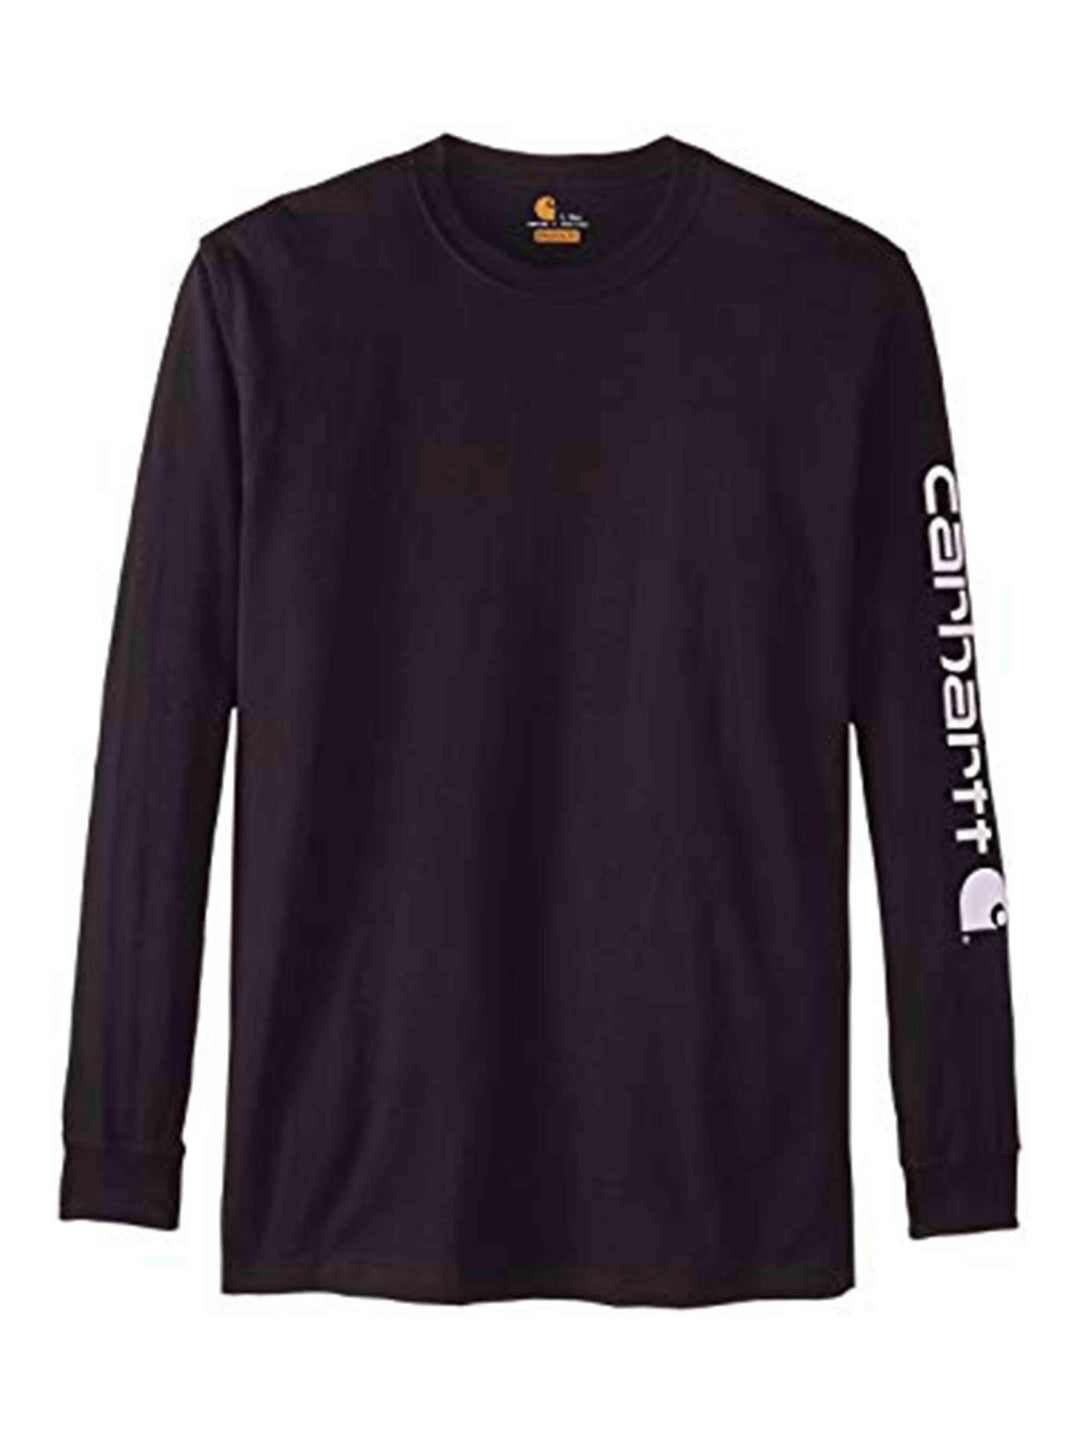 Carhartt Sleeve Spellout Logo Long Sleeved Tee Black Prior